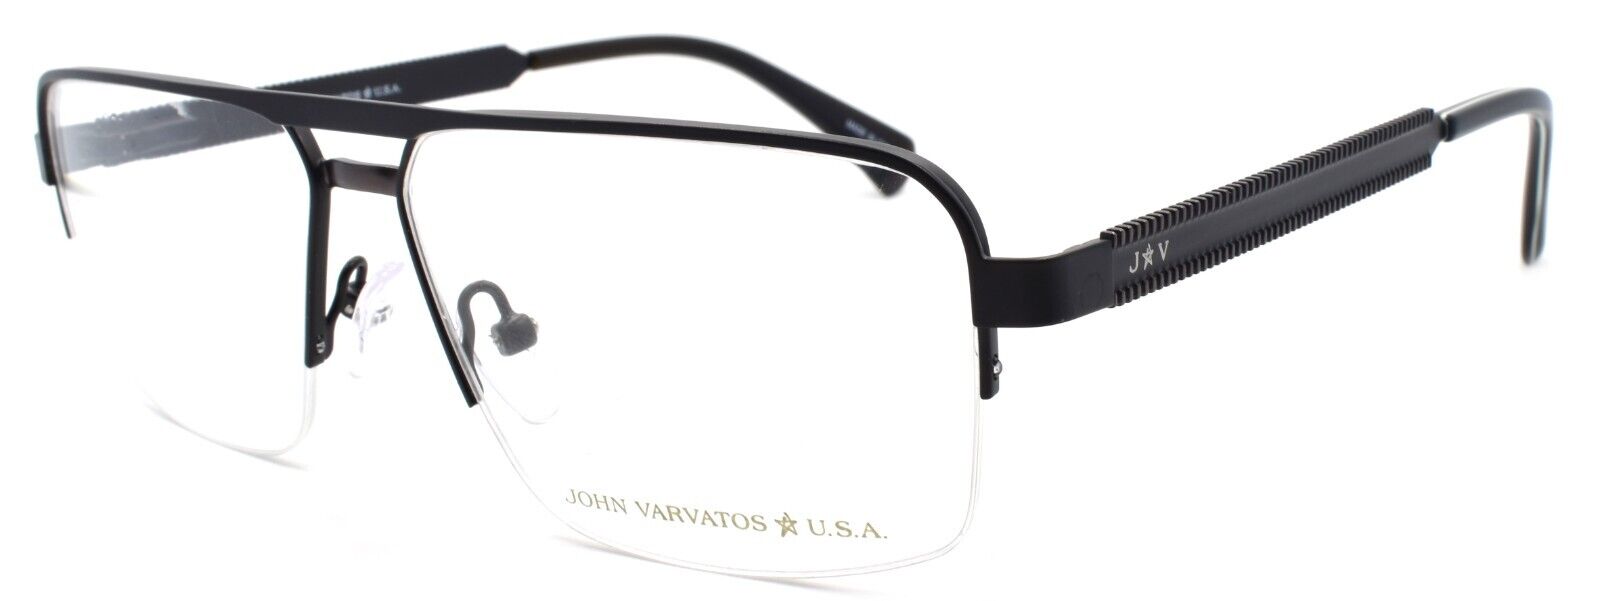 1-John Varvatos VJVC005 Men's Eyeglasses Frames Half-rim 57-13-145 Black-751286356144-IKSpecs